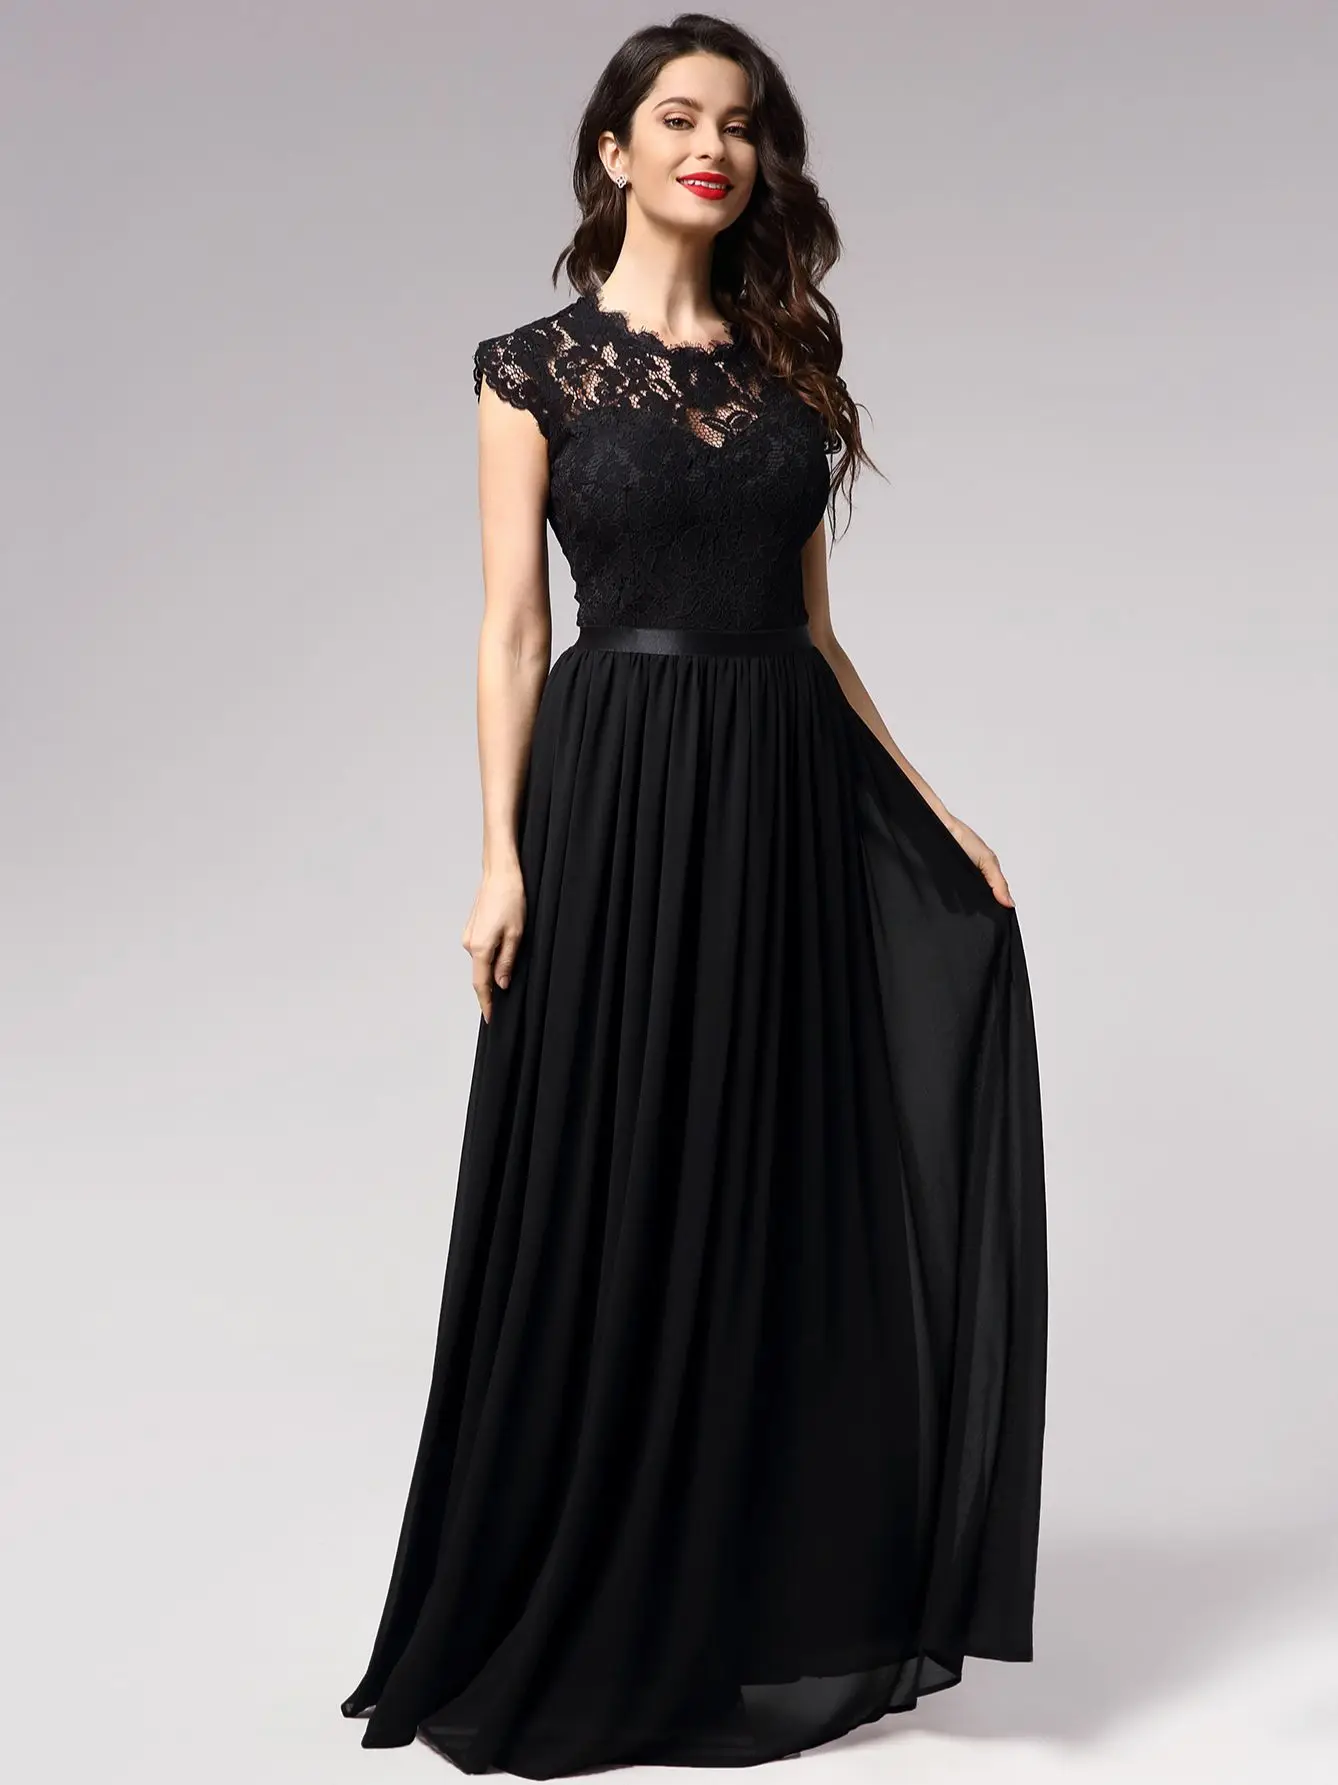 Miusol Women's Retro Lace Sleeveless Plus Size Formal Evening Prom Dress 